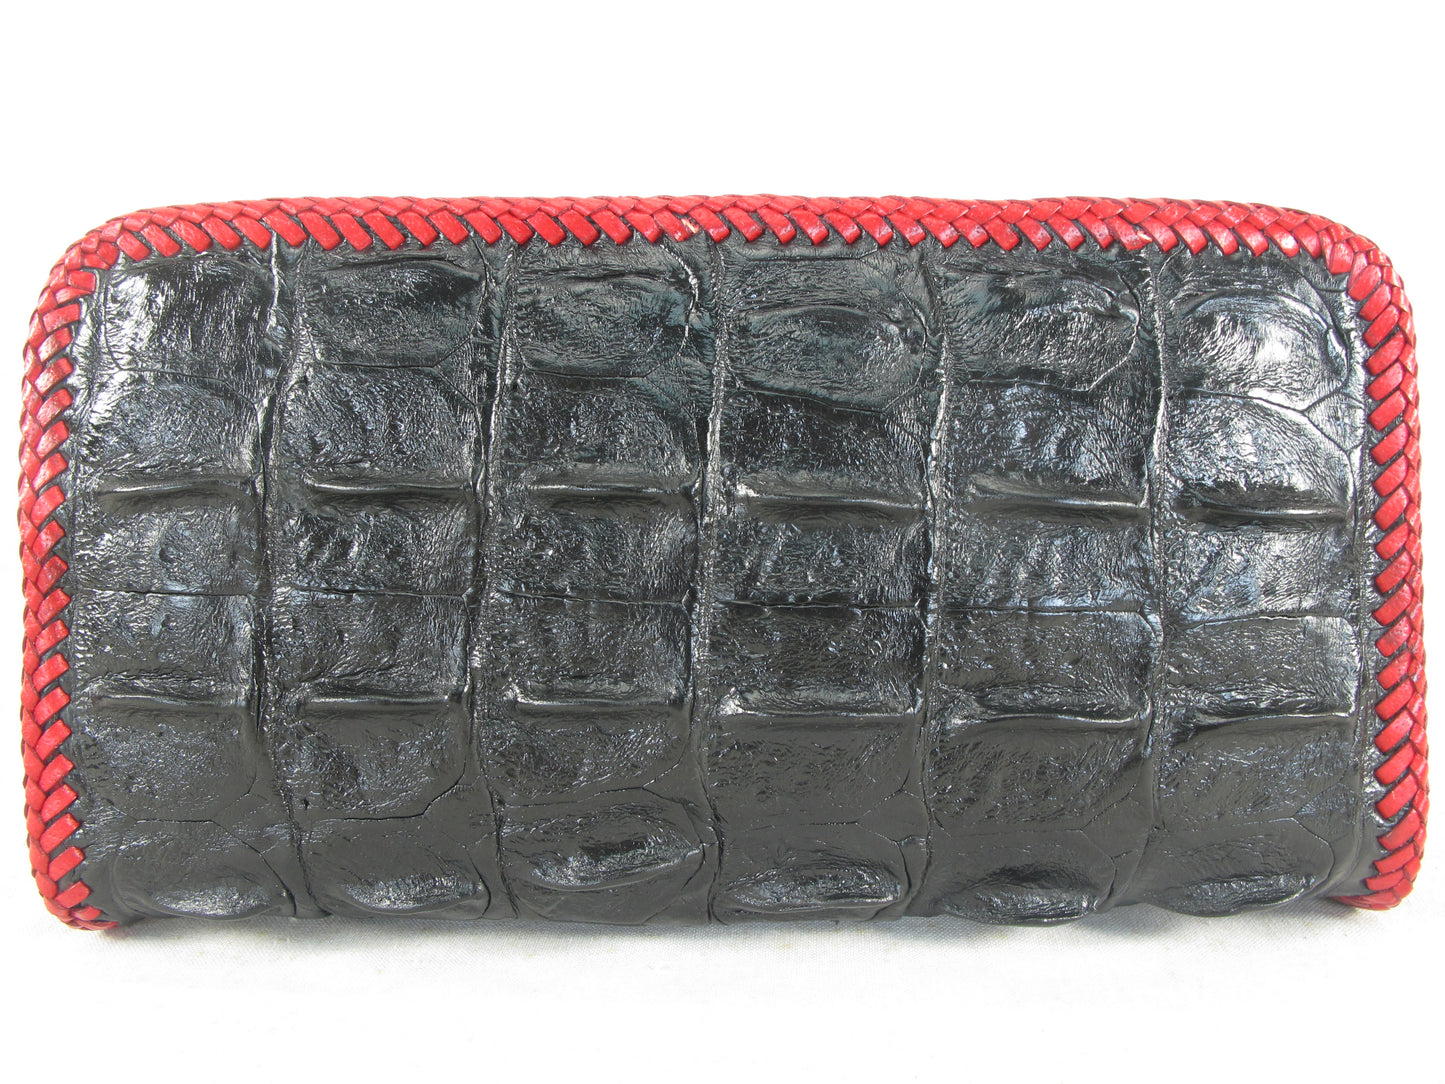 Genuine Crocodile Backbone Skin Leather Zip Around Handmade Clutch Wallet Purse with Red Trim